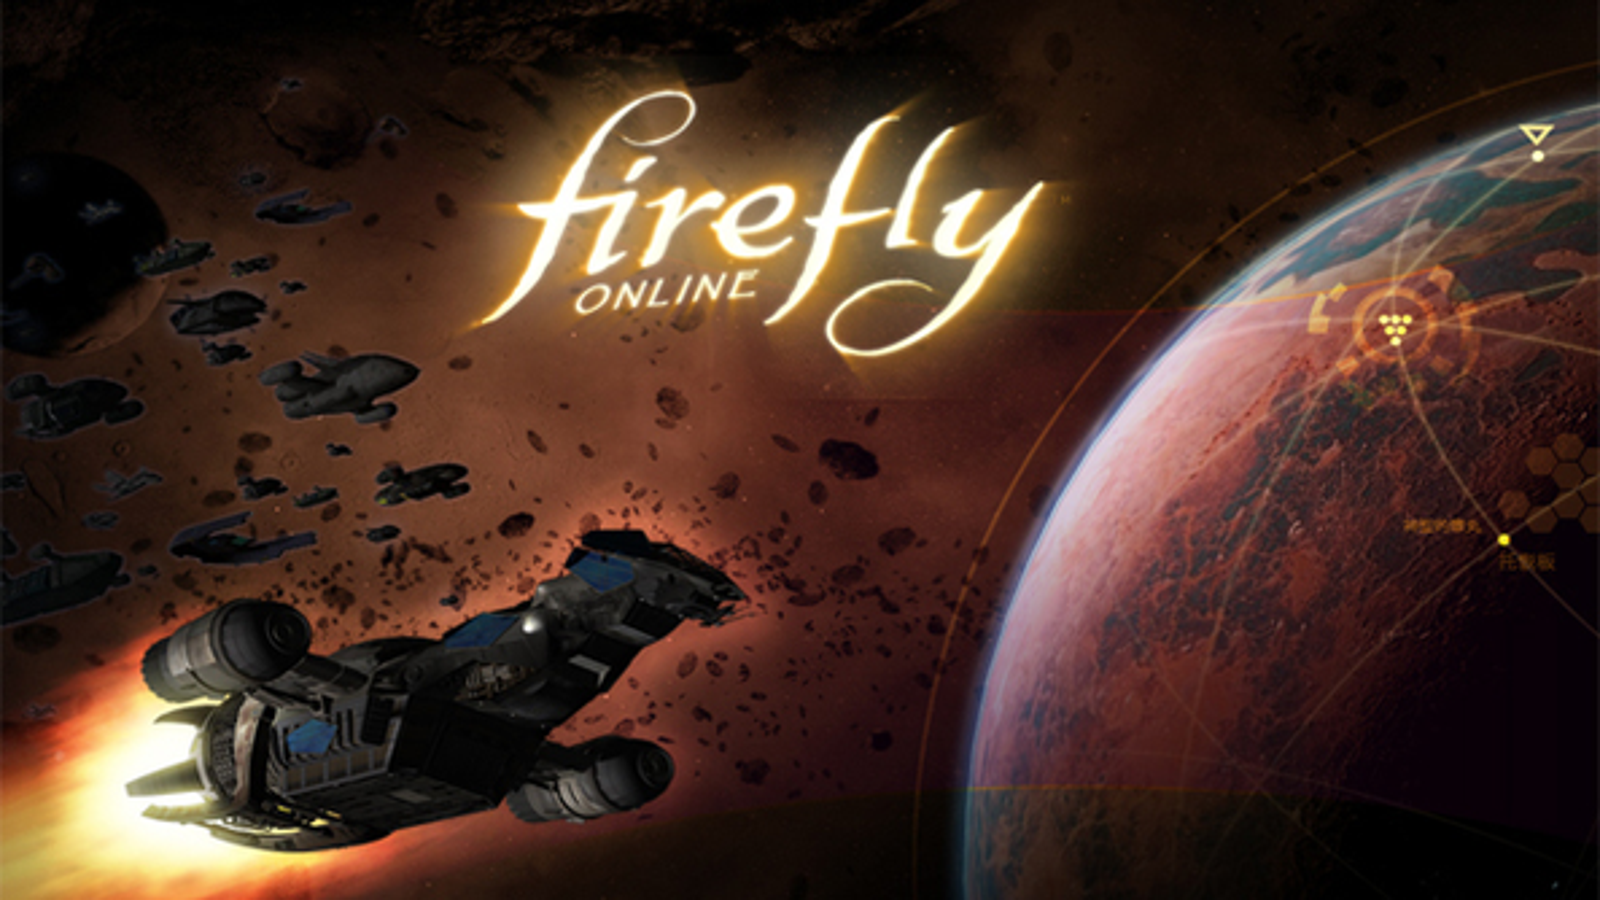 firefly serenity logo wallpaper